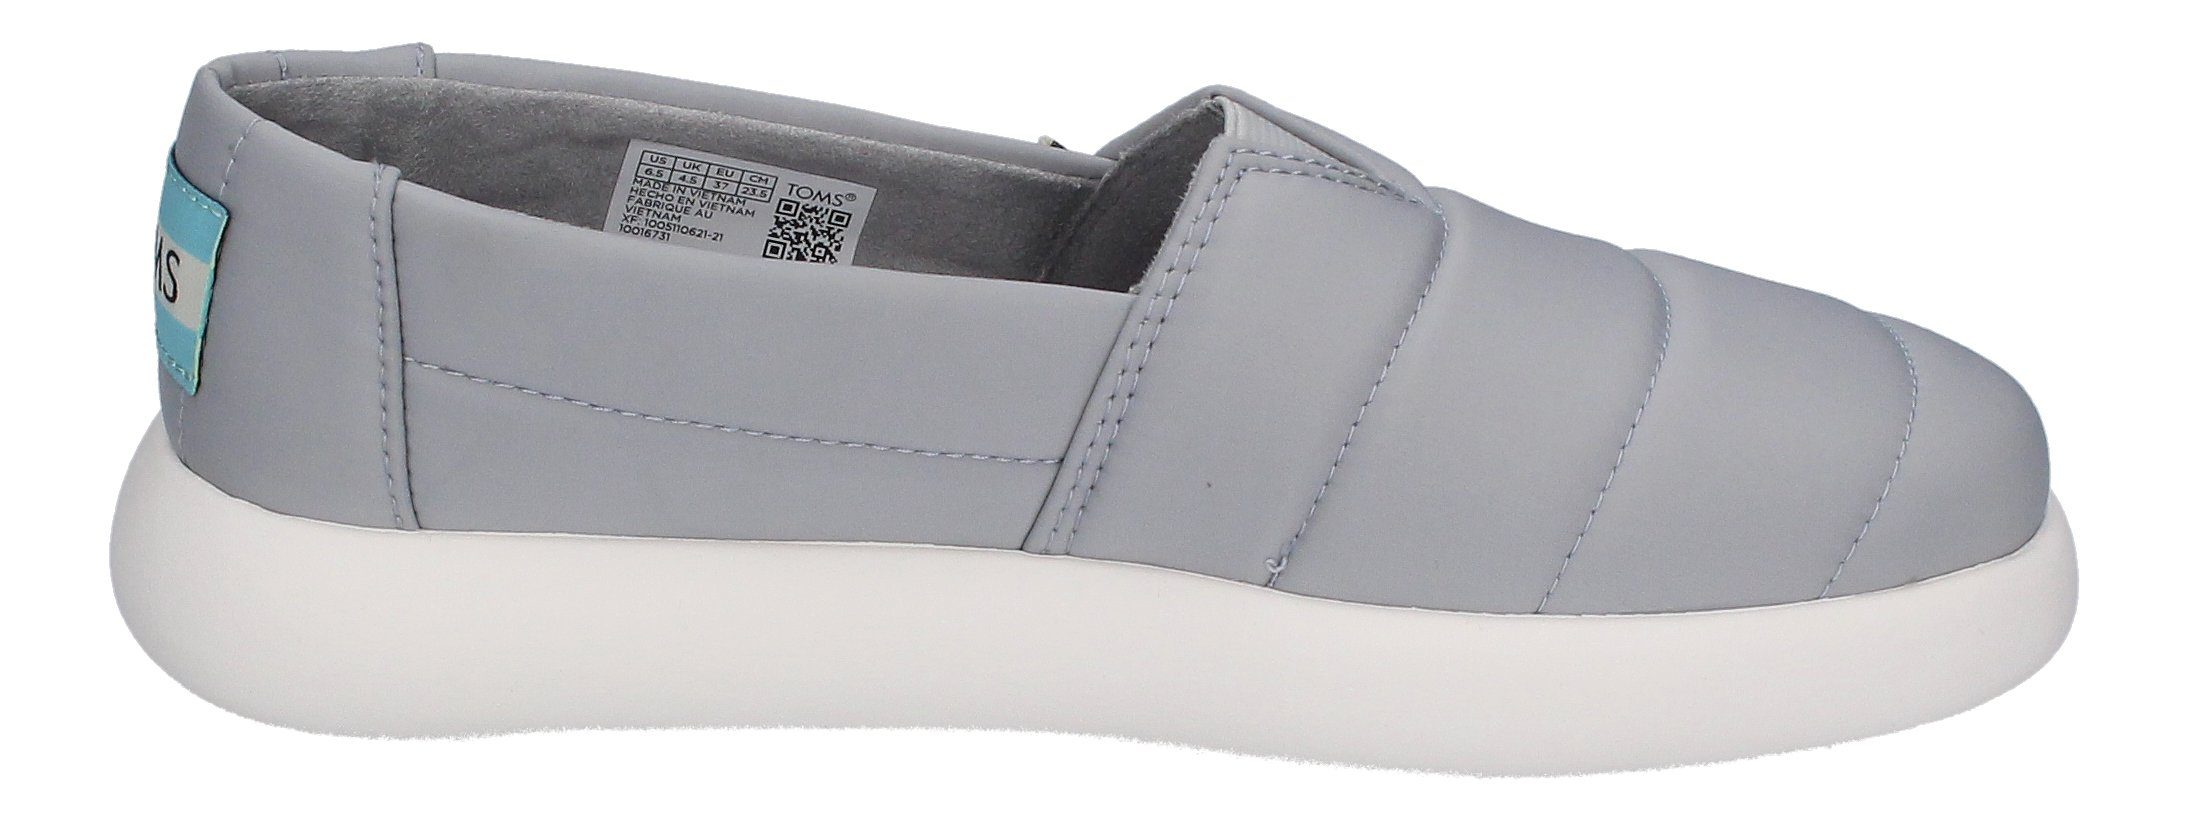 TOMS ALPARGATA MALLOW 10016731 Slip-On Grey Sneaker